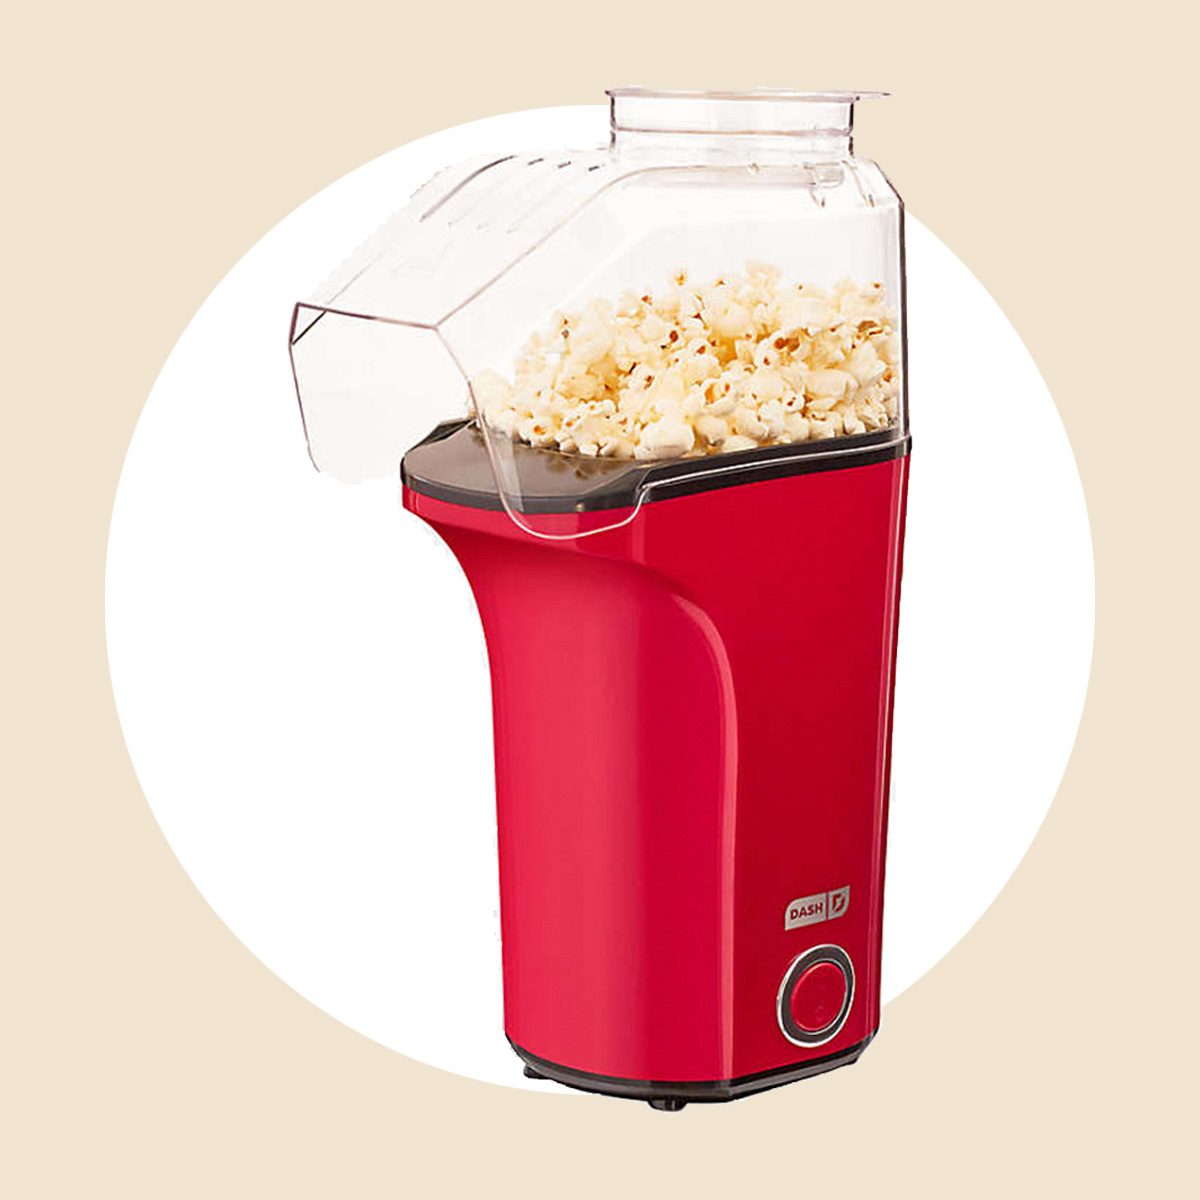 The Best Hot Air Popcorn Maker